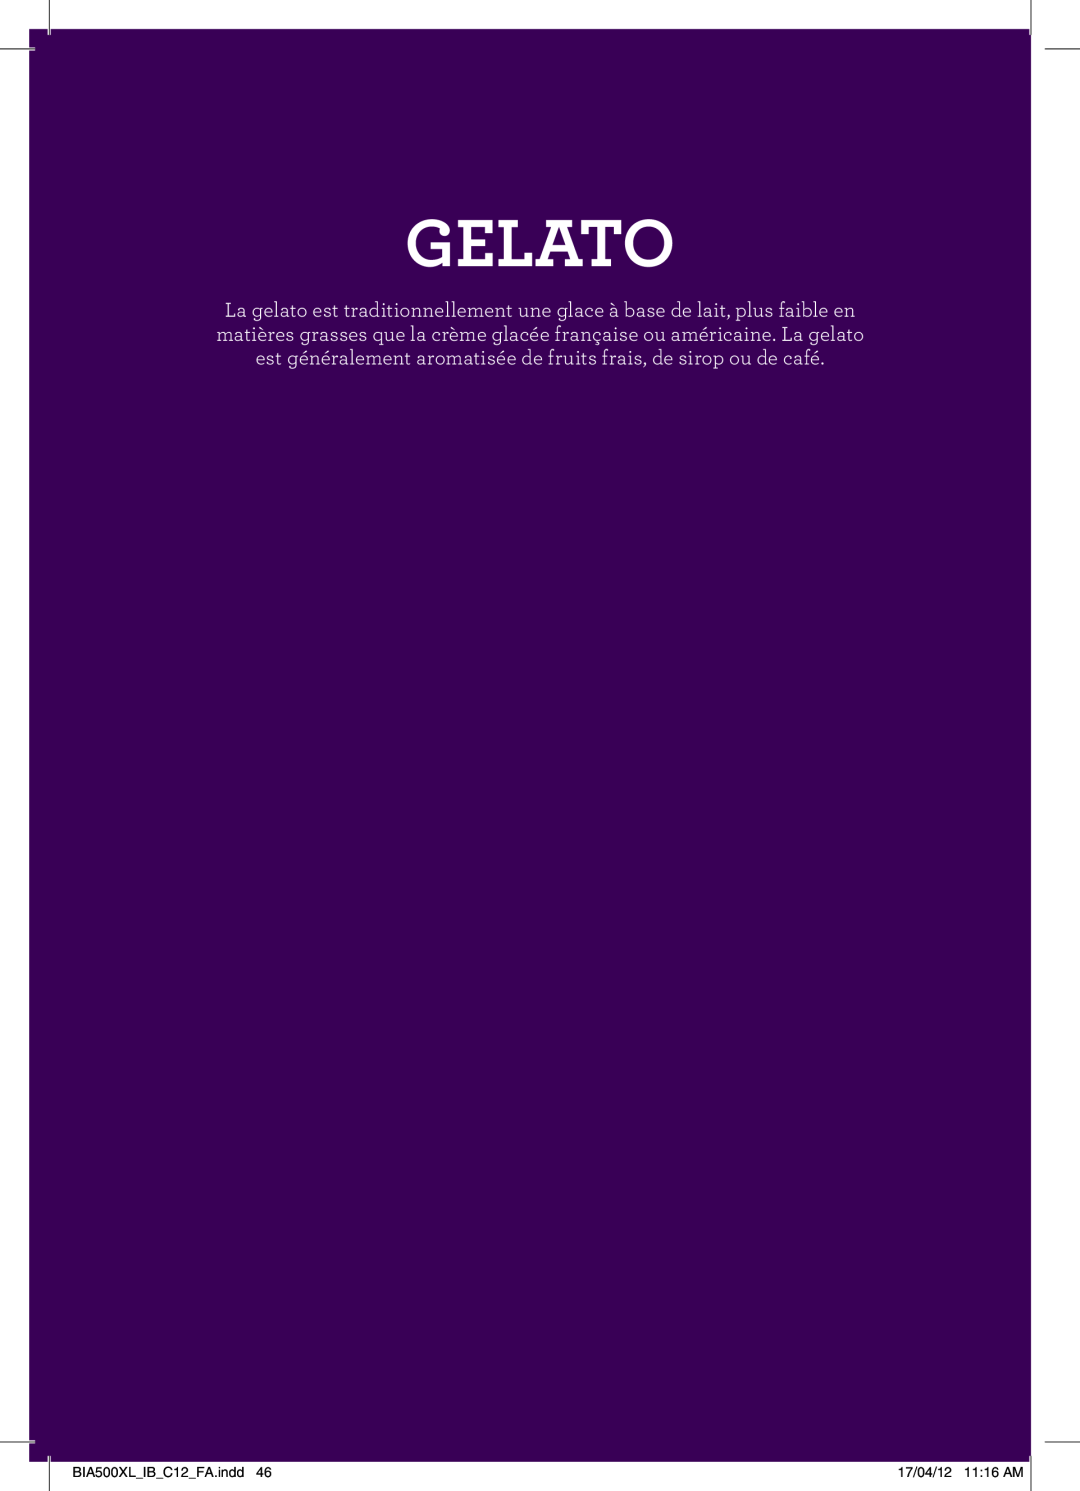 Breville manual Gelato, BIA500XLIBC12FA.indd, 17/04/12 1116 AM 